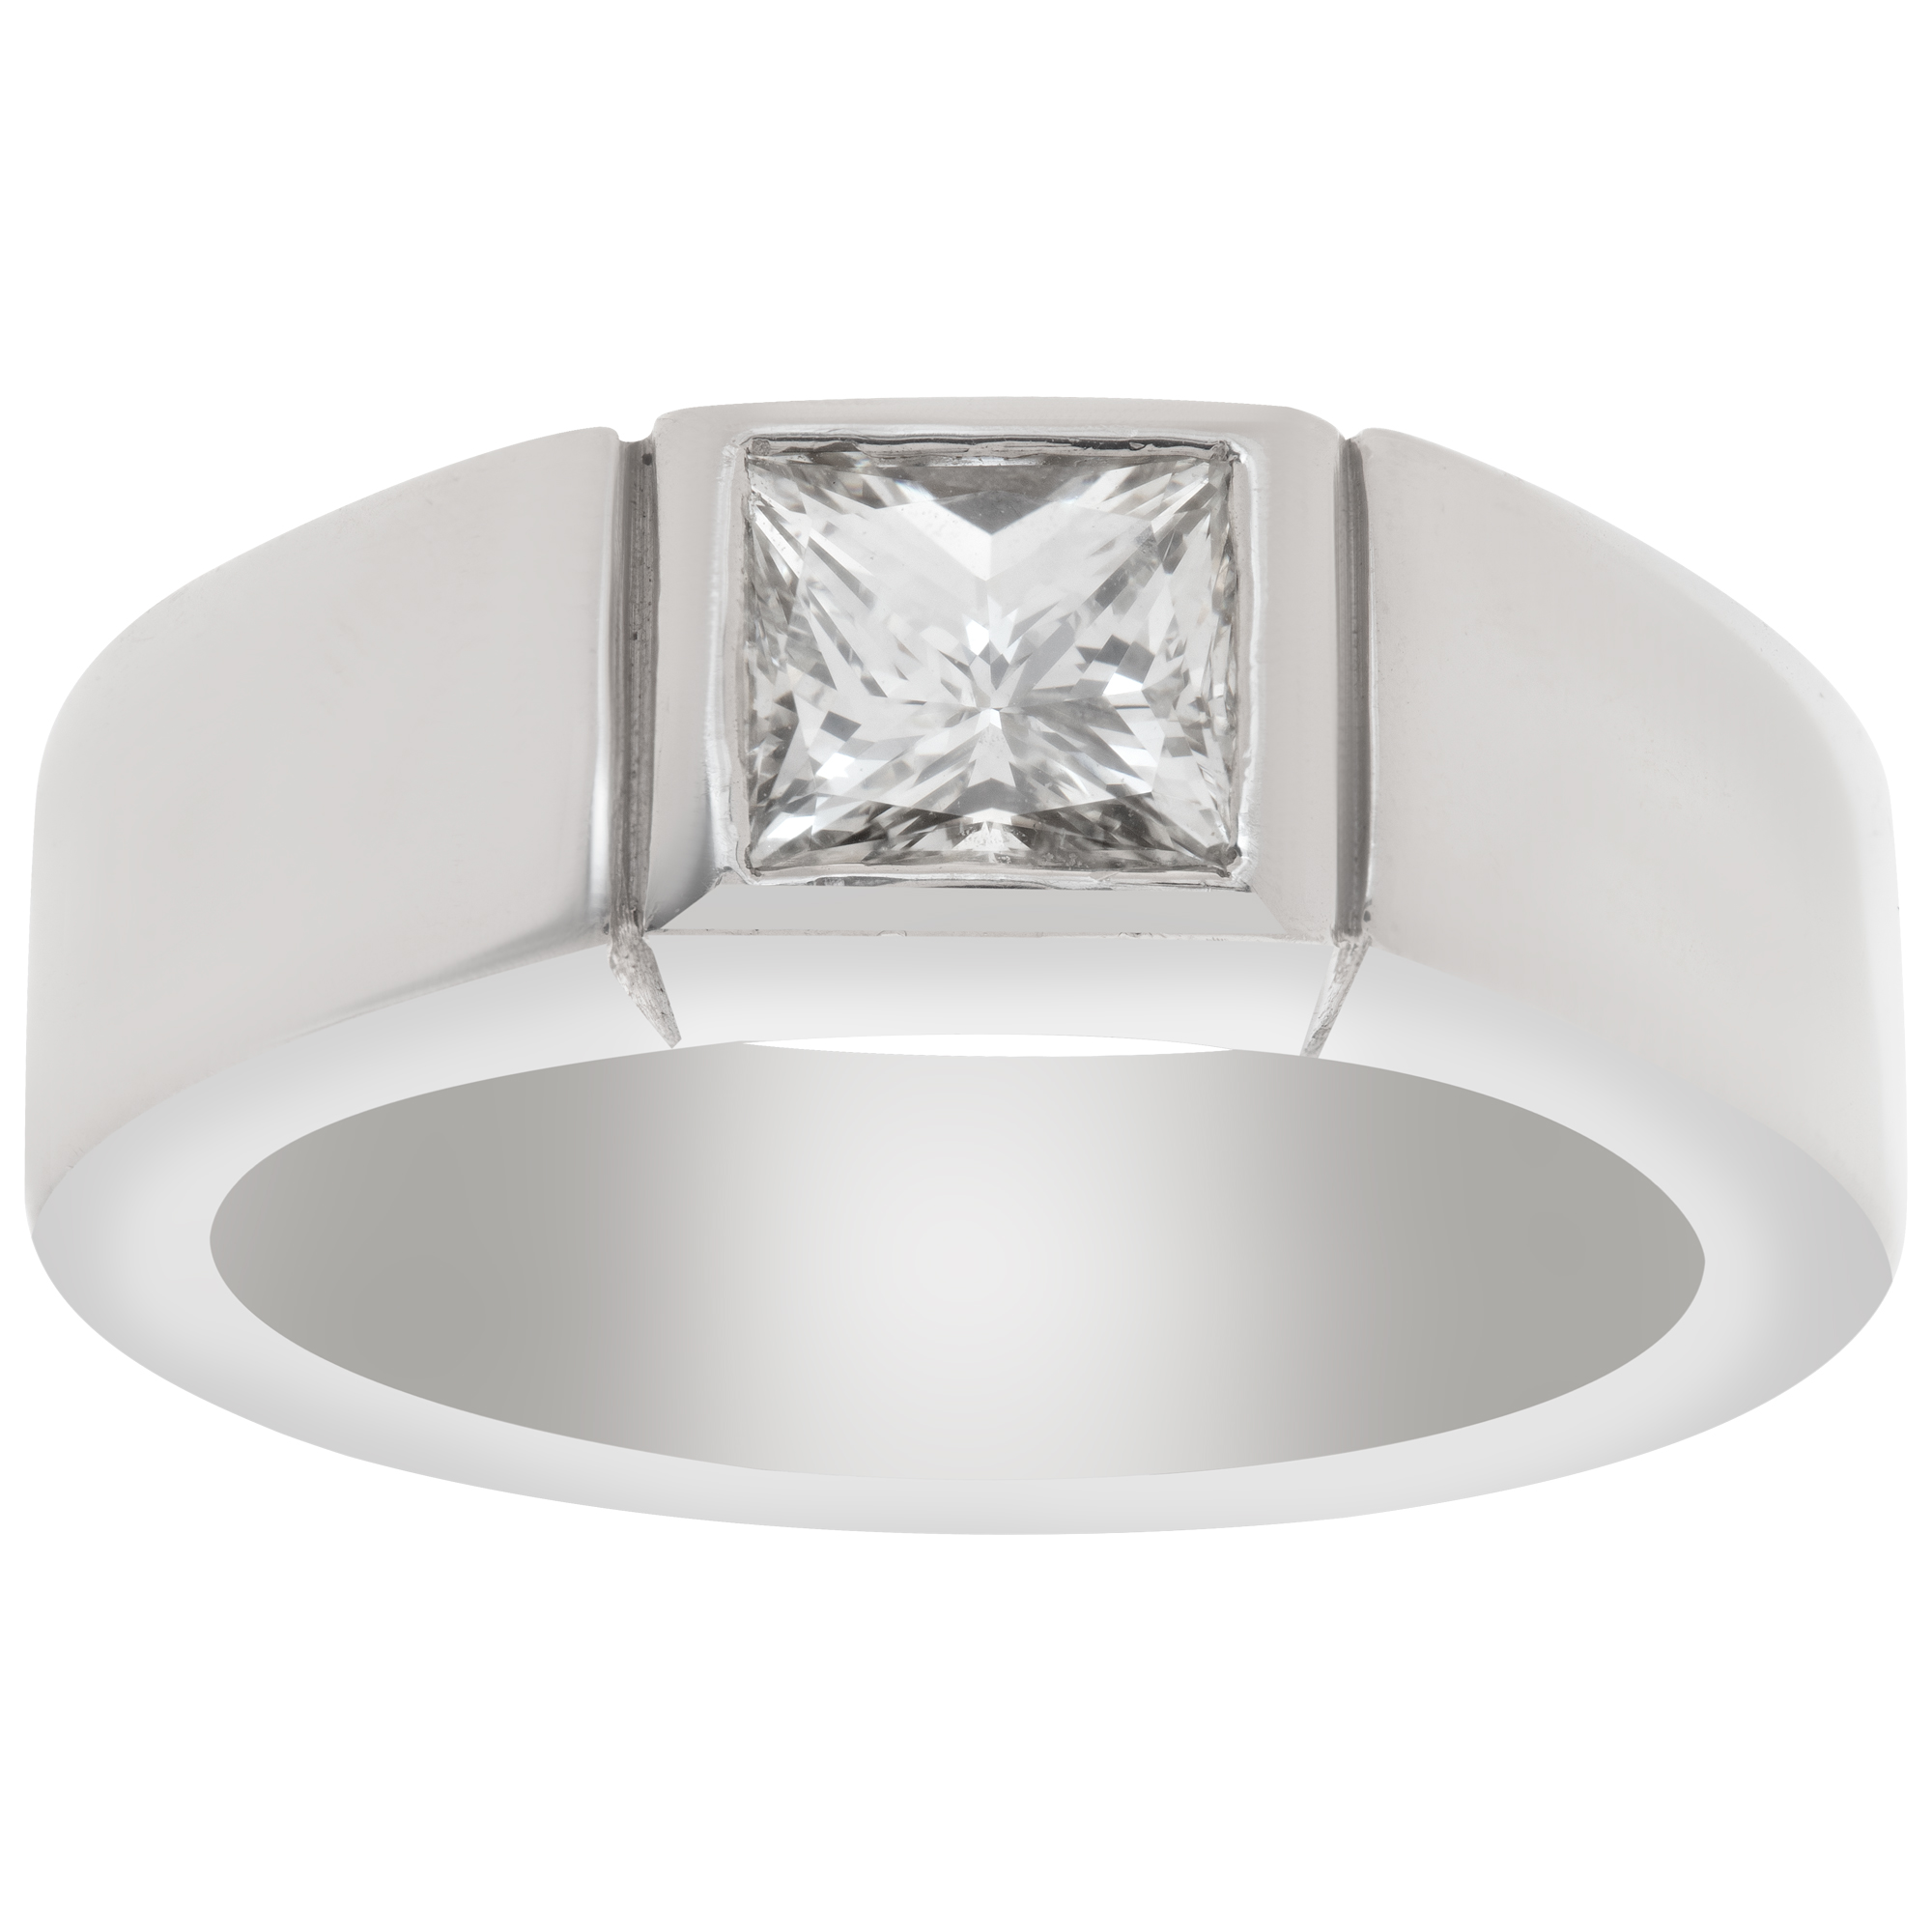 EGL certified princess cut diamond 1.03 carat (H color, VS1 clarity) solitaire ring